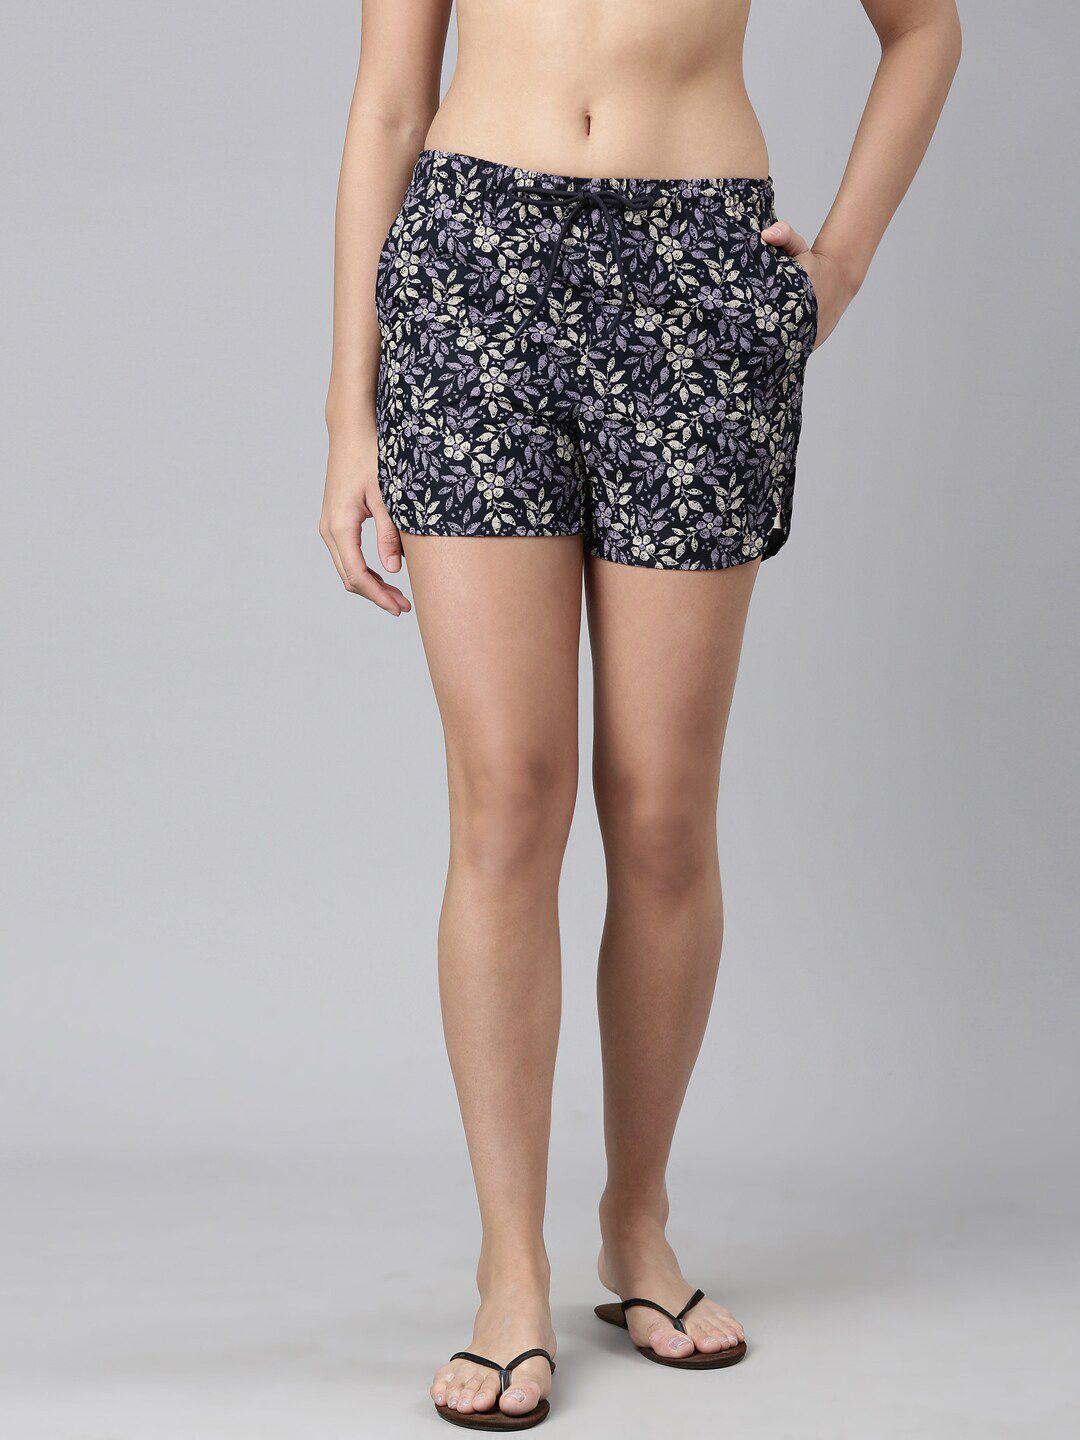 enamor floral printed cotton shorts